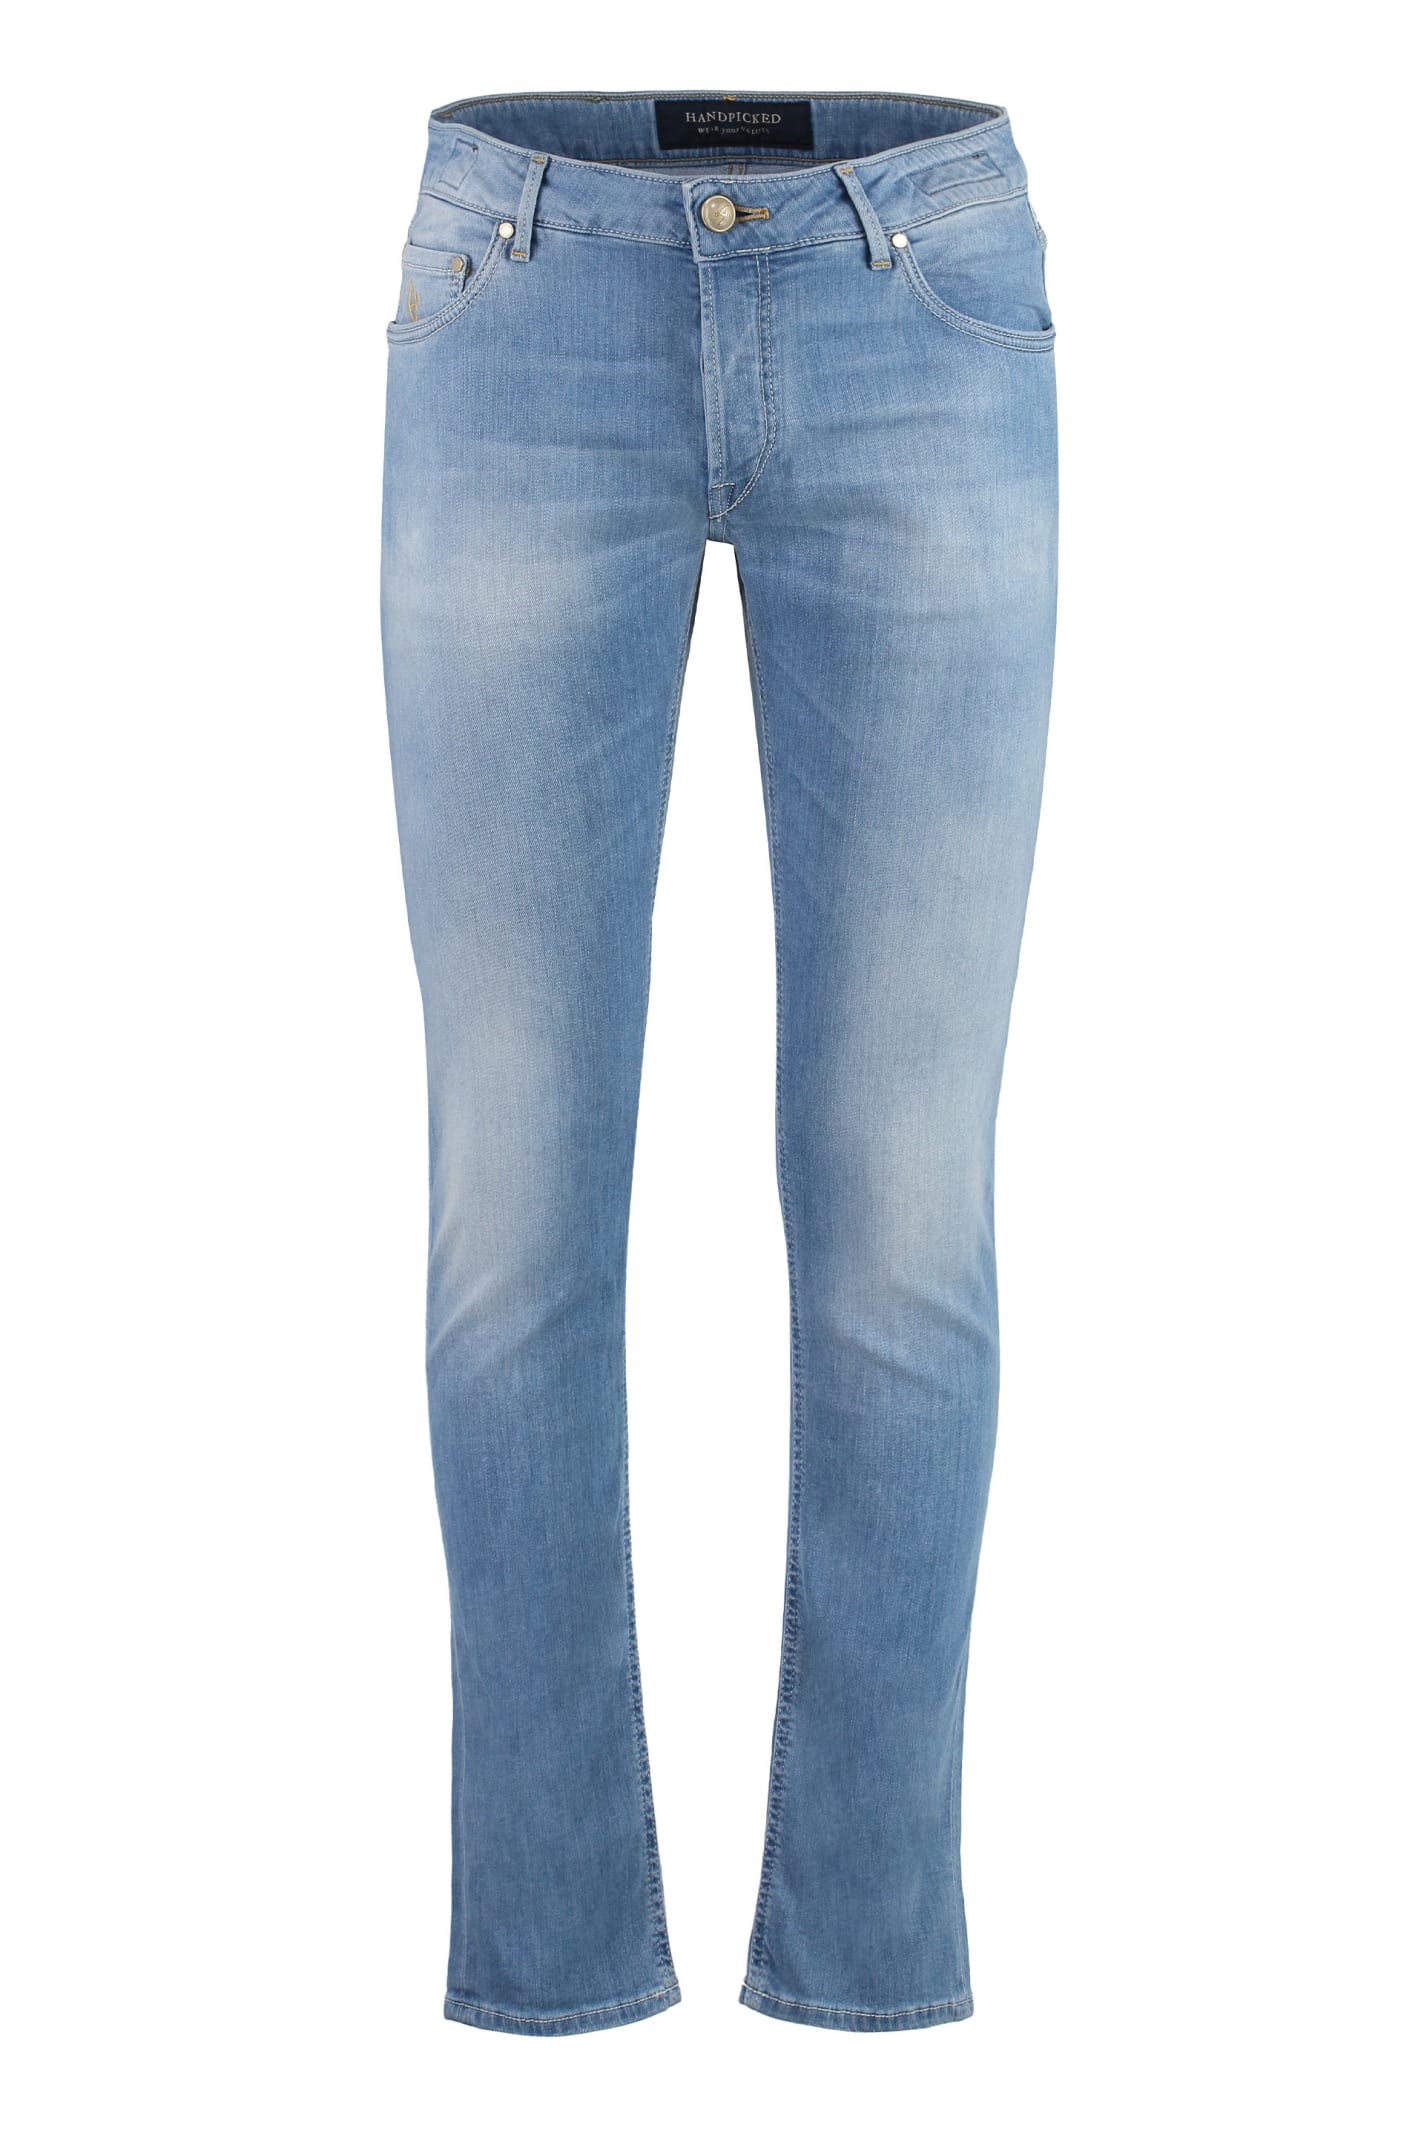 Orvieto Slim Fit Jeans